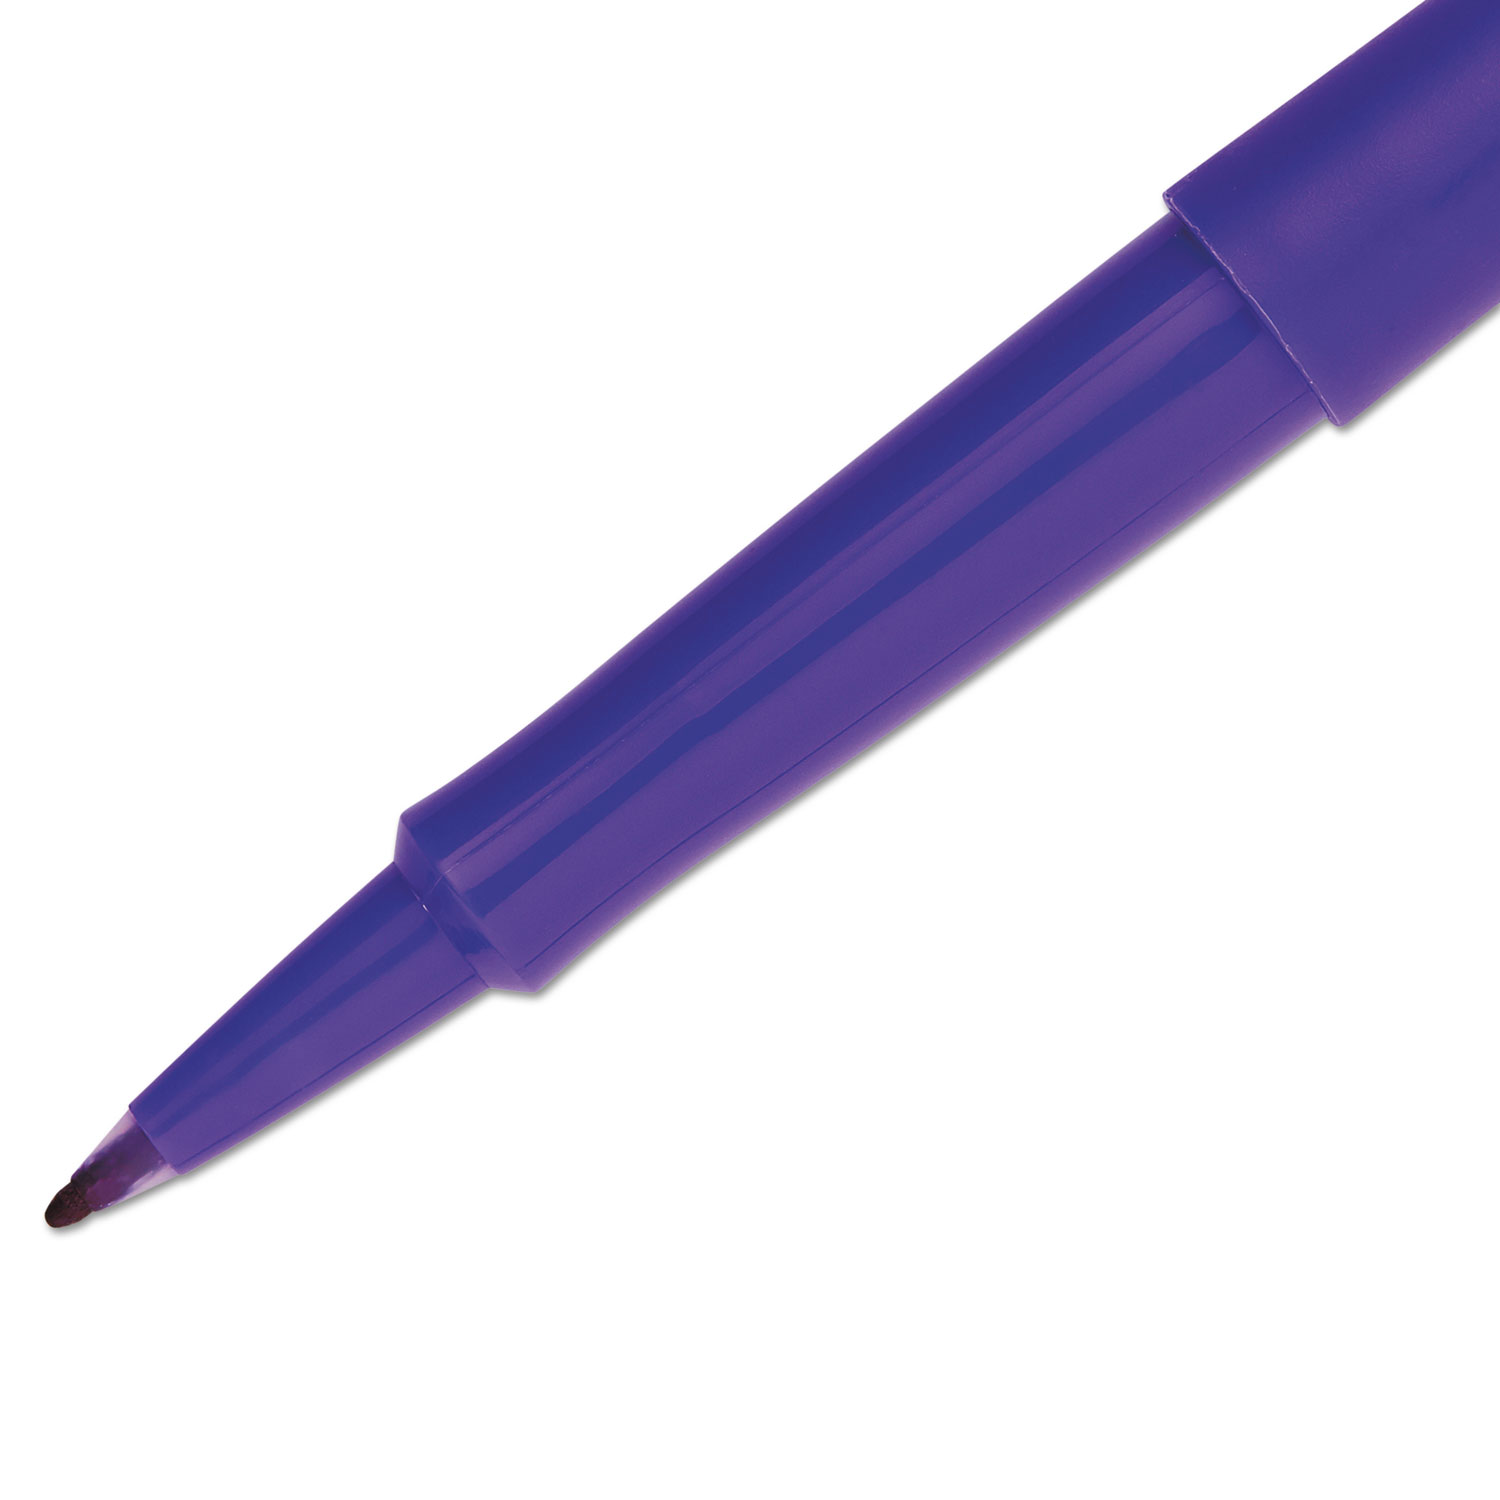 Paper Mate Flair Medium Point Porous Markers - Medium Pen Point